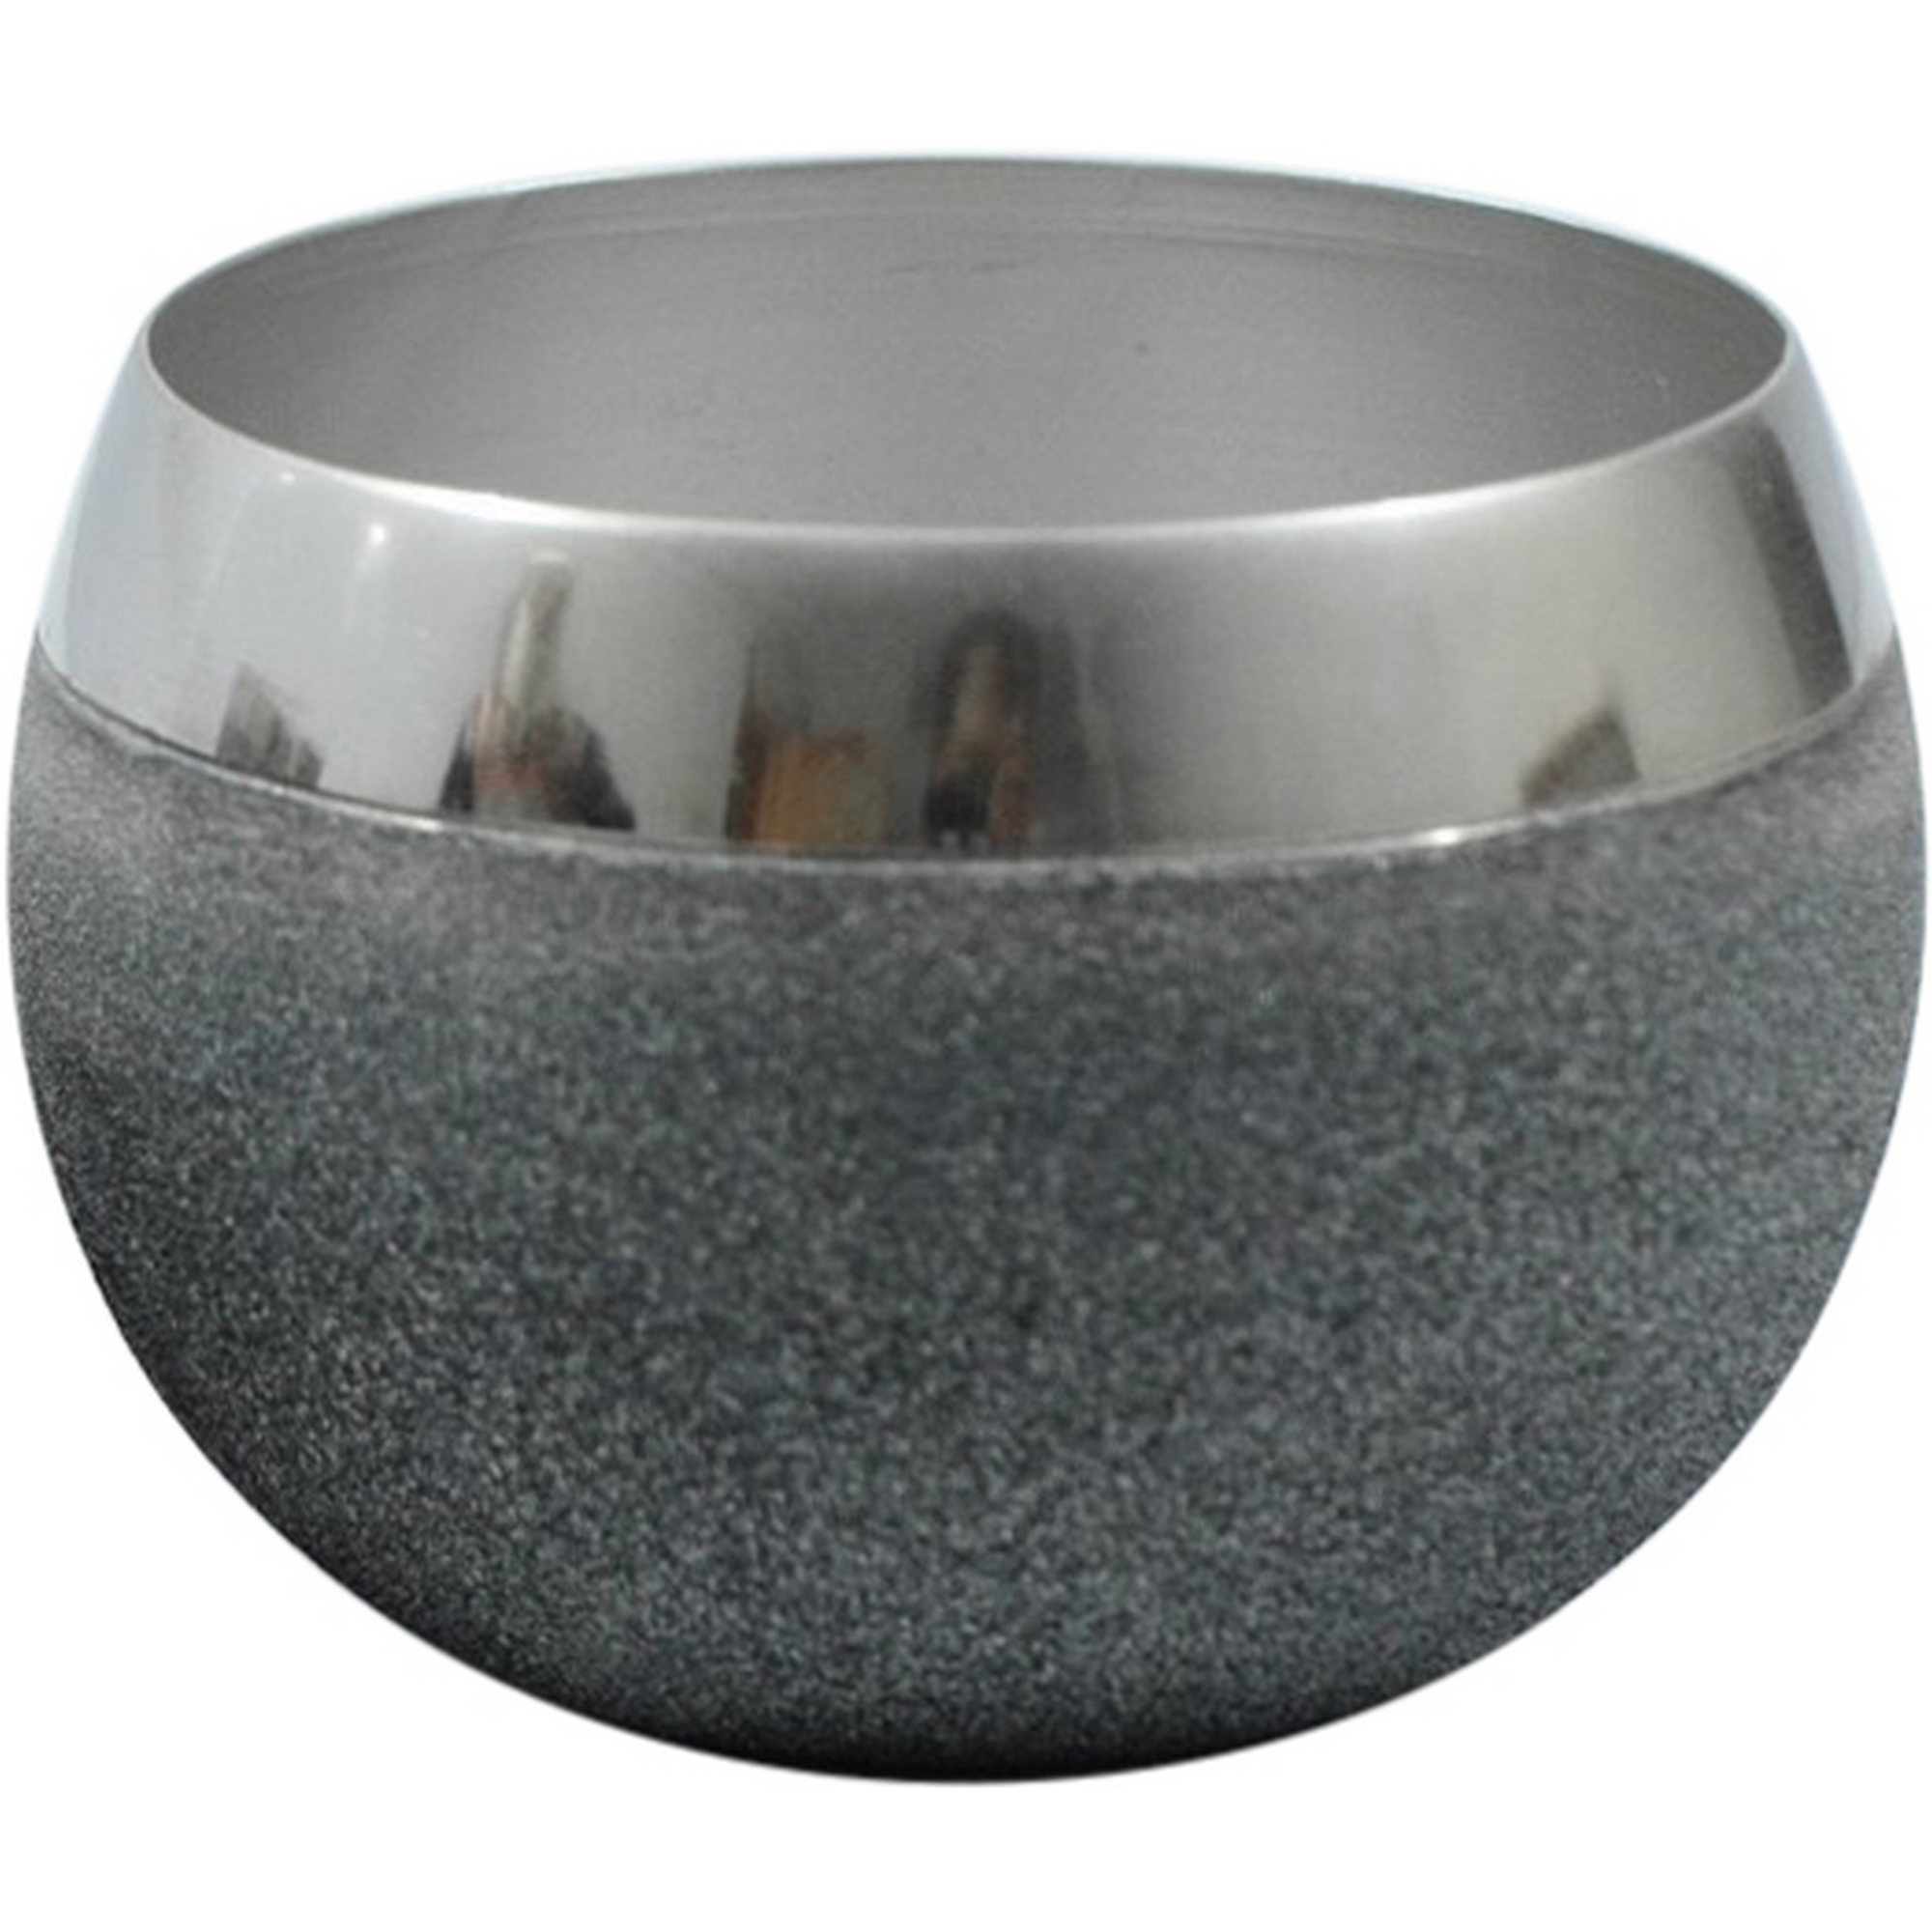 Metallübertopf lackiert grau mit Silberrand 9 x 10 x 7 cm + product picture